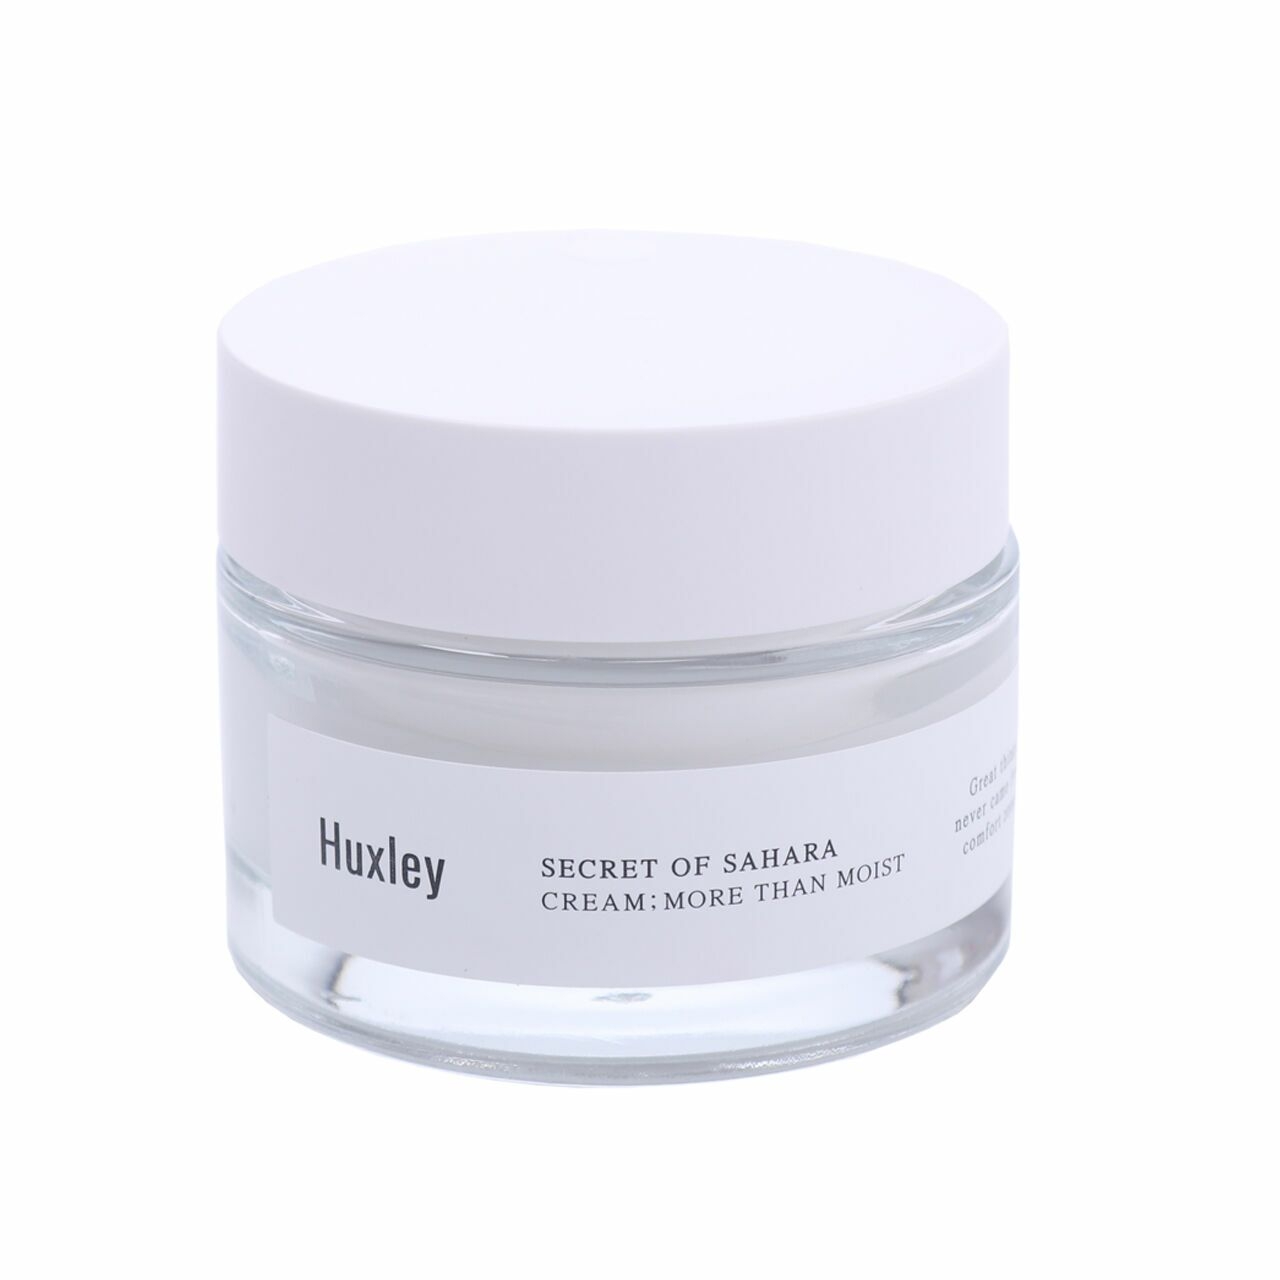 Huxley Secret Of Sahara Cream More Than Moist Skin Care